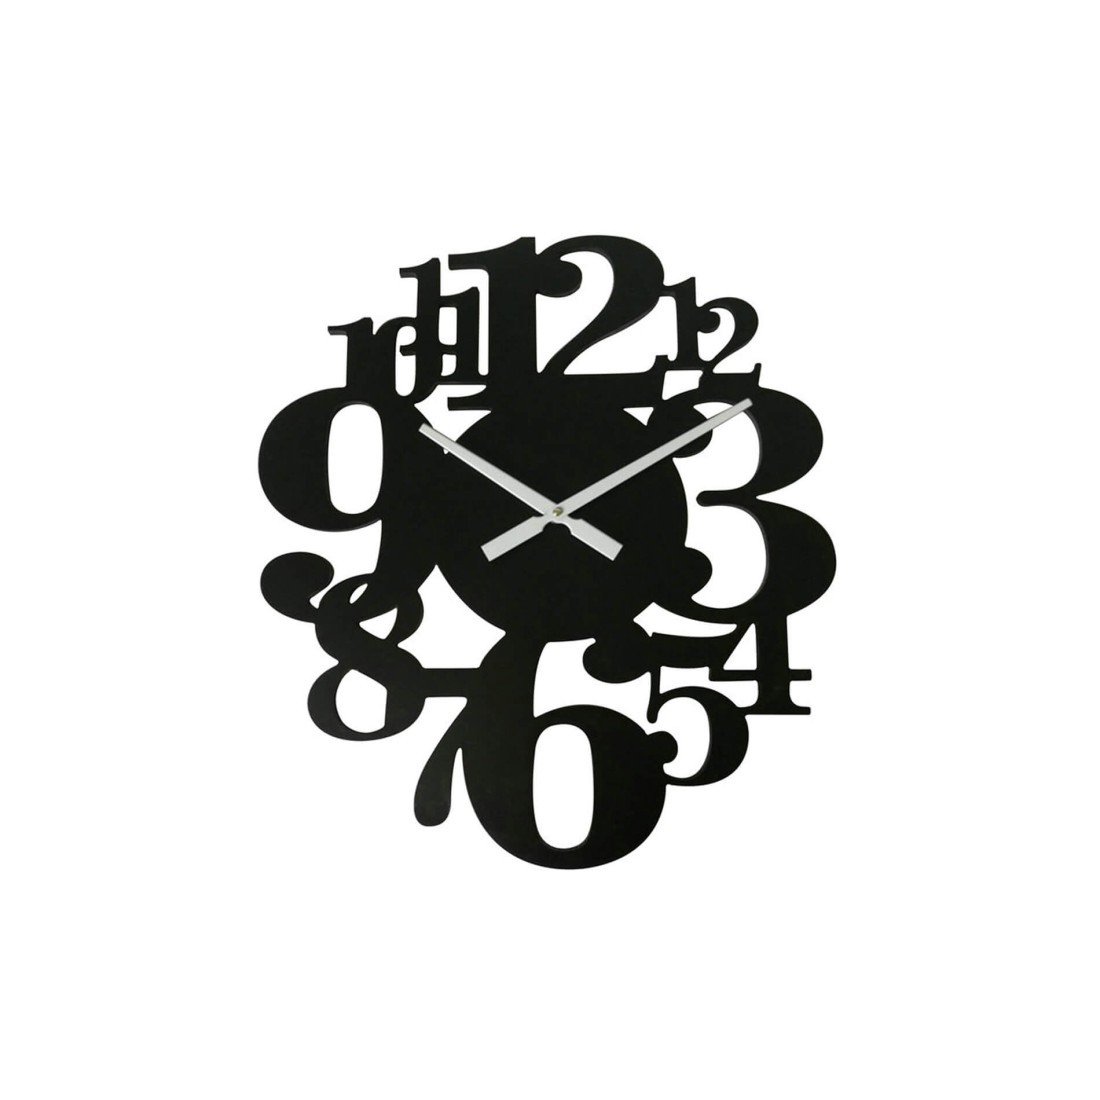 Reloj de pared negro moderno con números dispersos